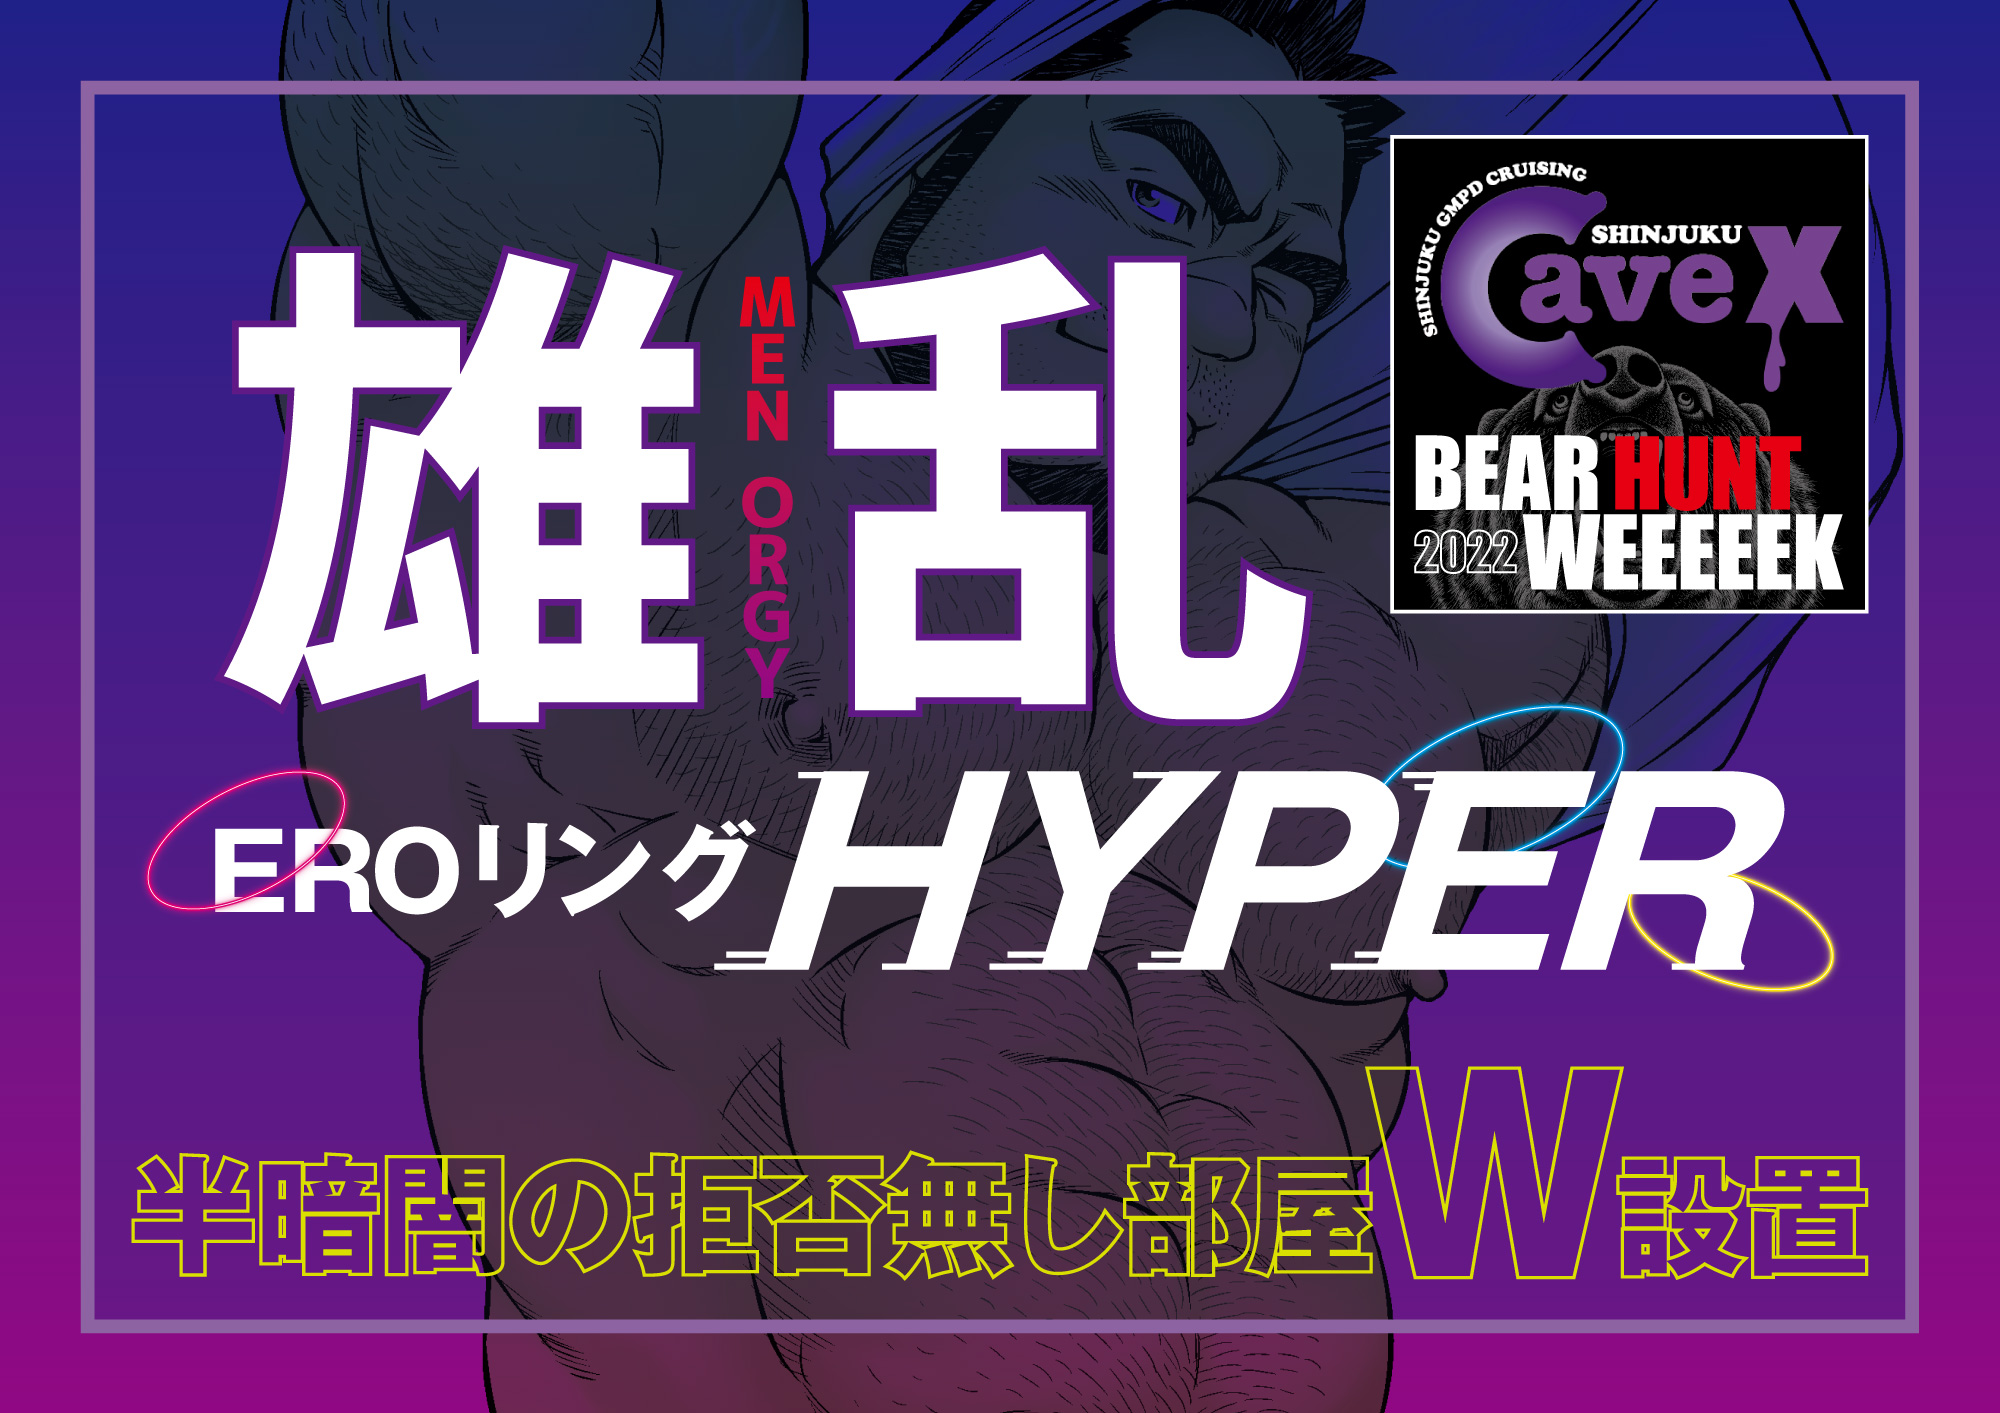 【BEAR HUNT WEEEEEK 2022】雄乱 EROリング HYPER (2022.09.19 MON)